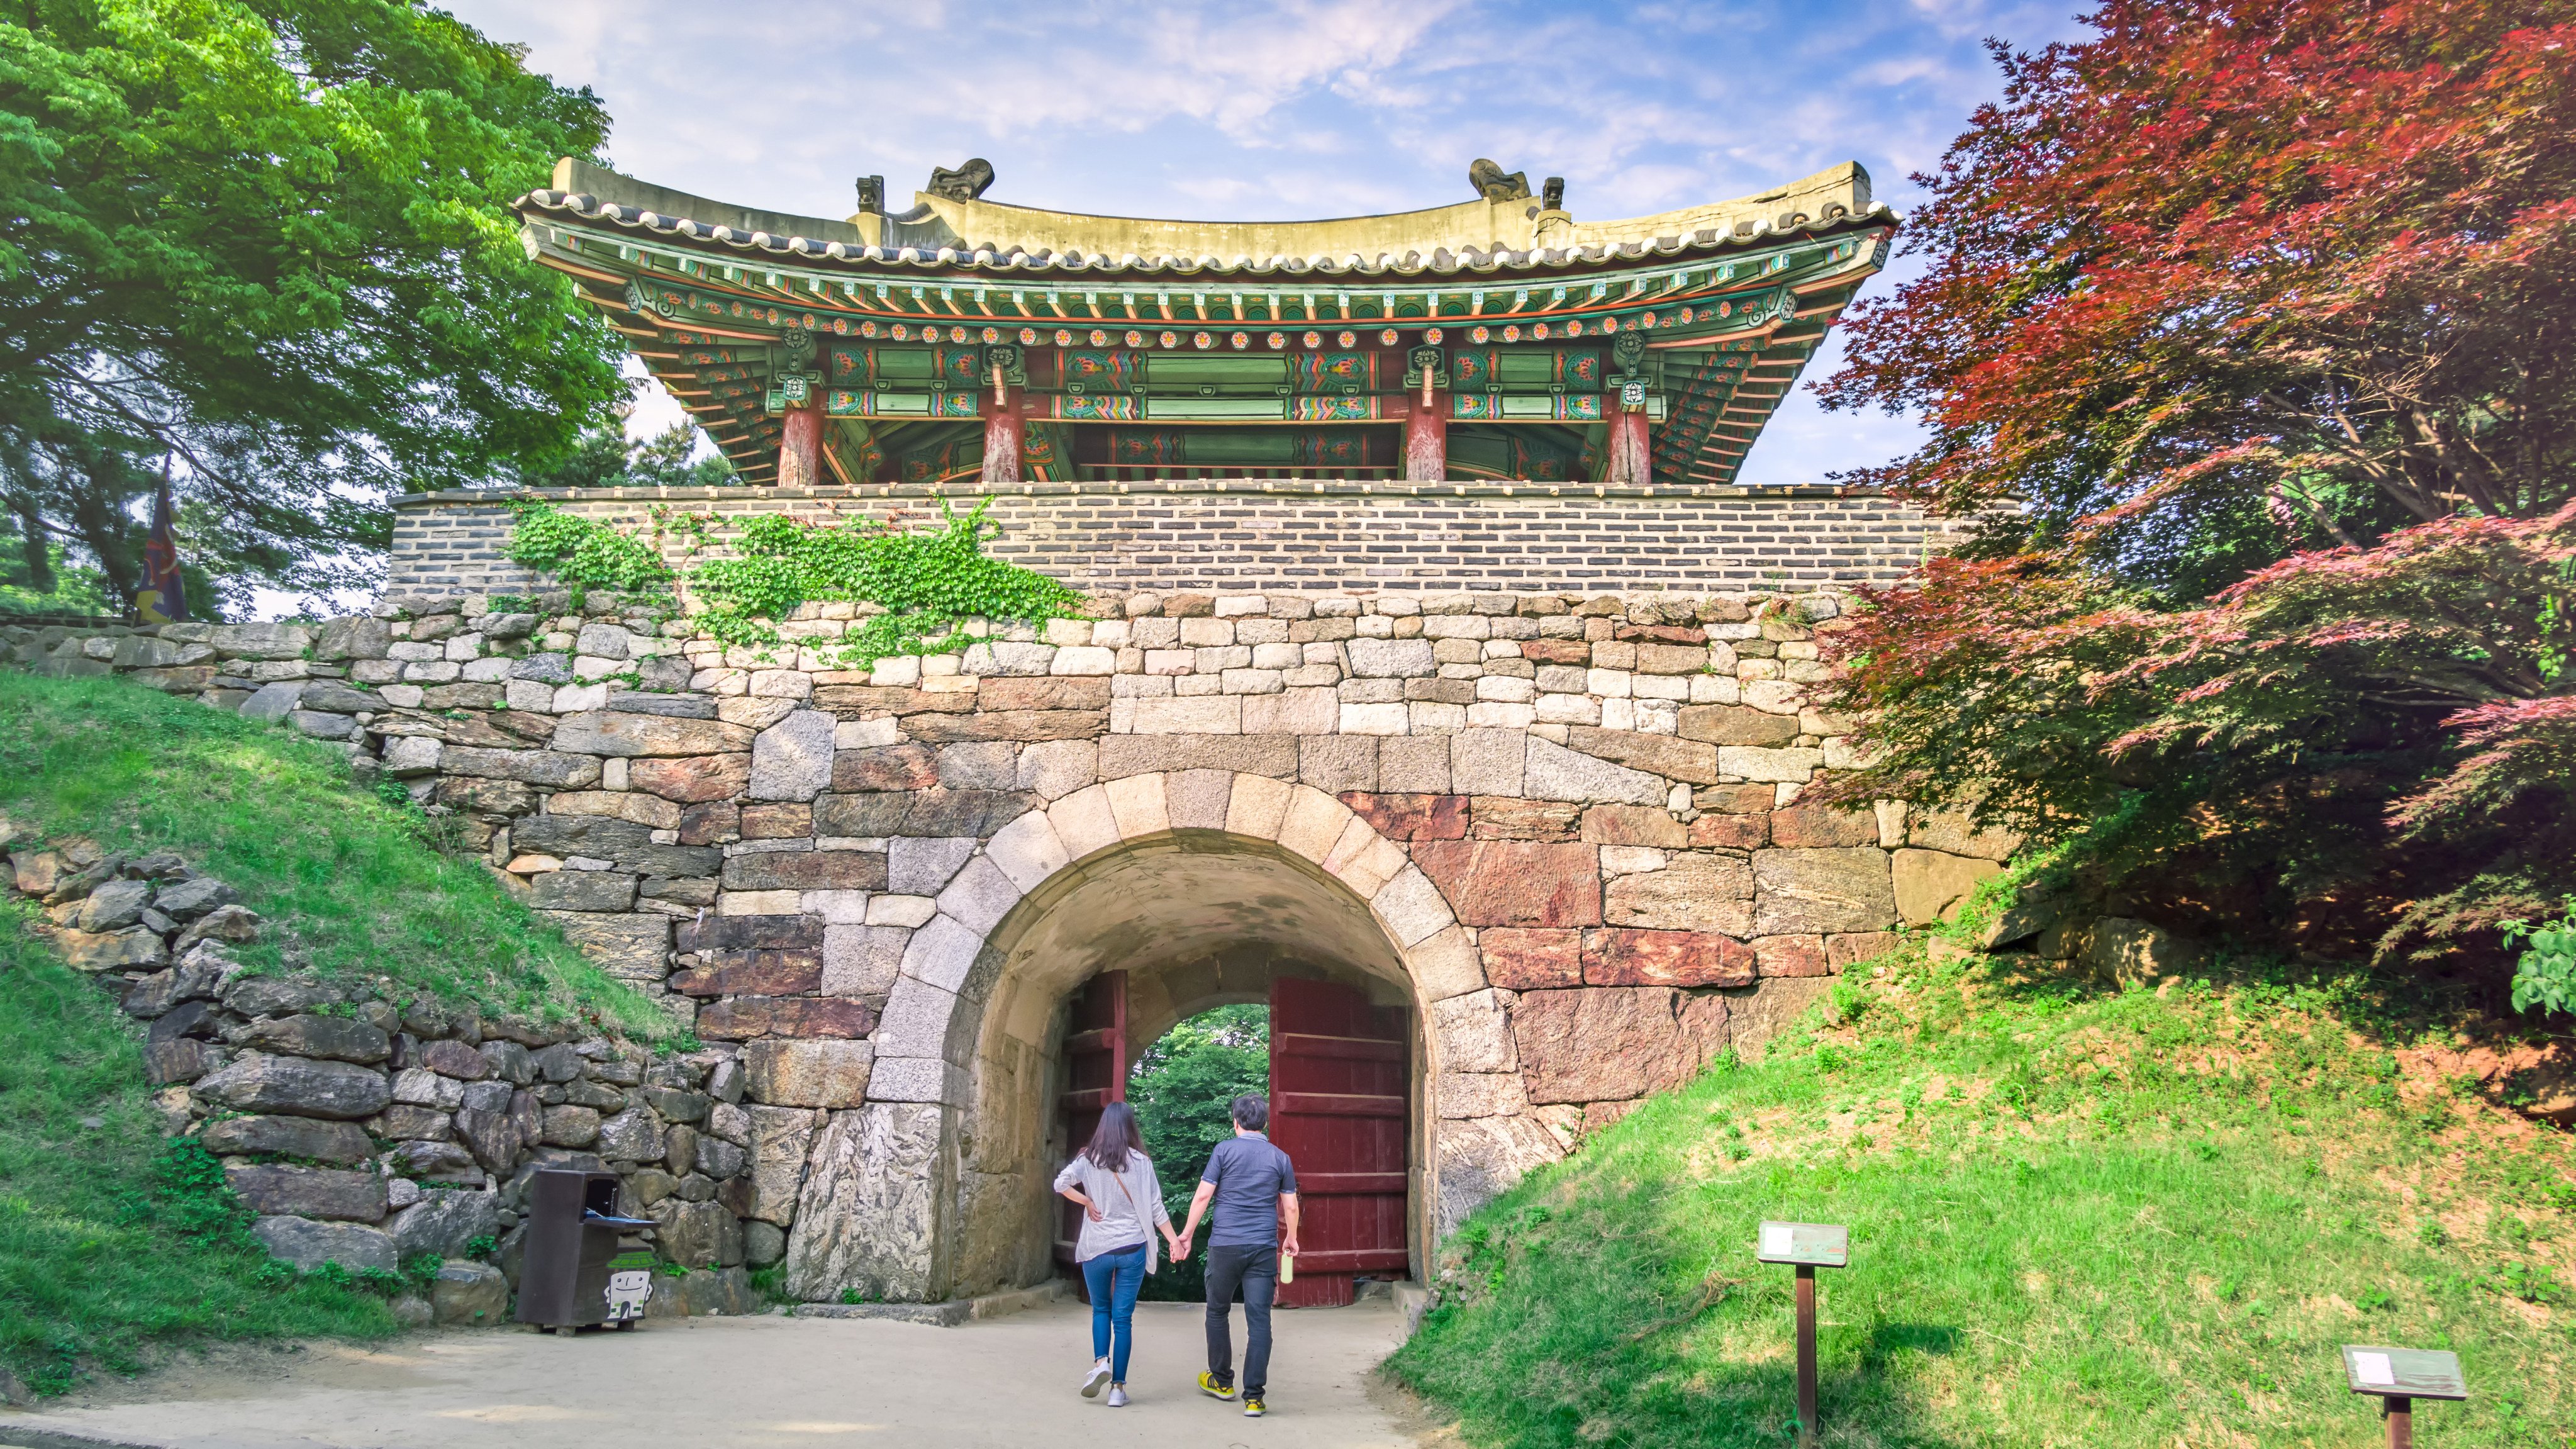 A gate at Namhansanseong, in South Korea. Photo: Shutterstock